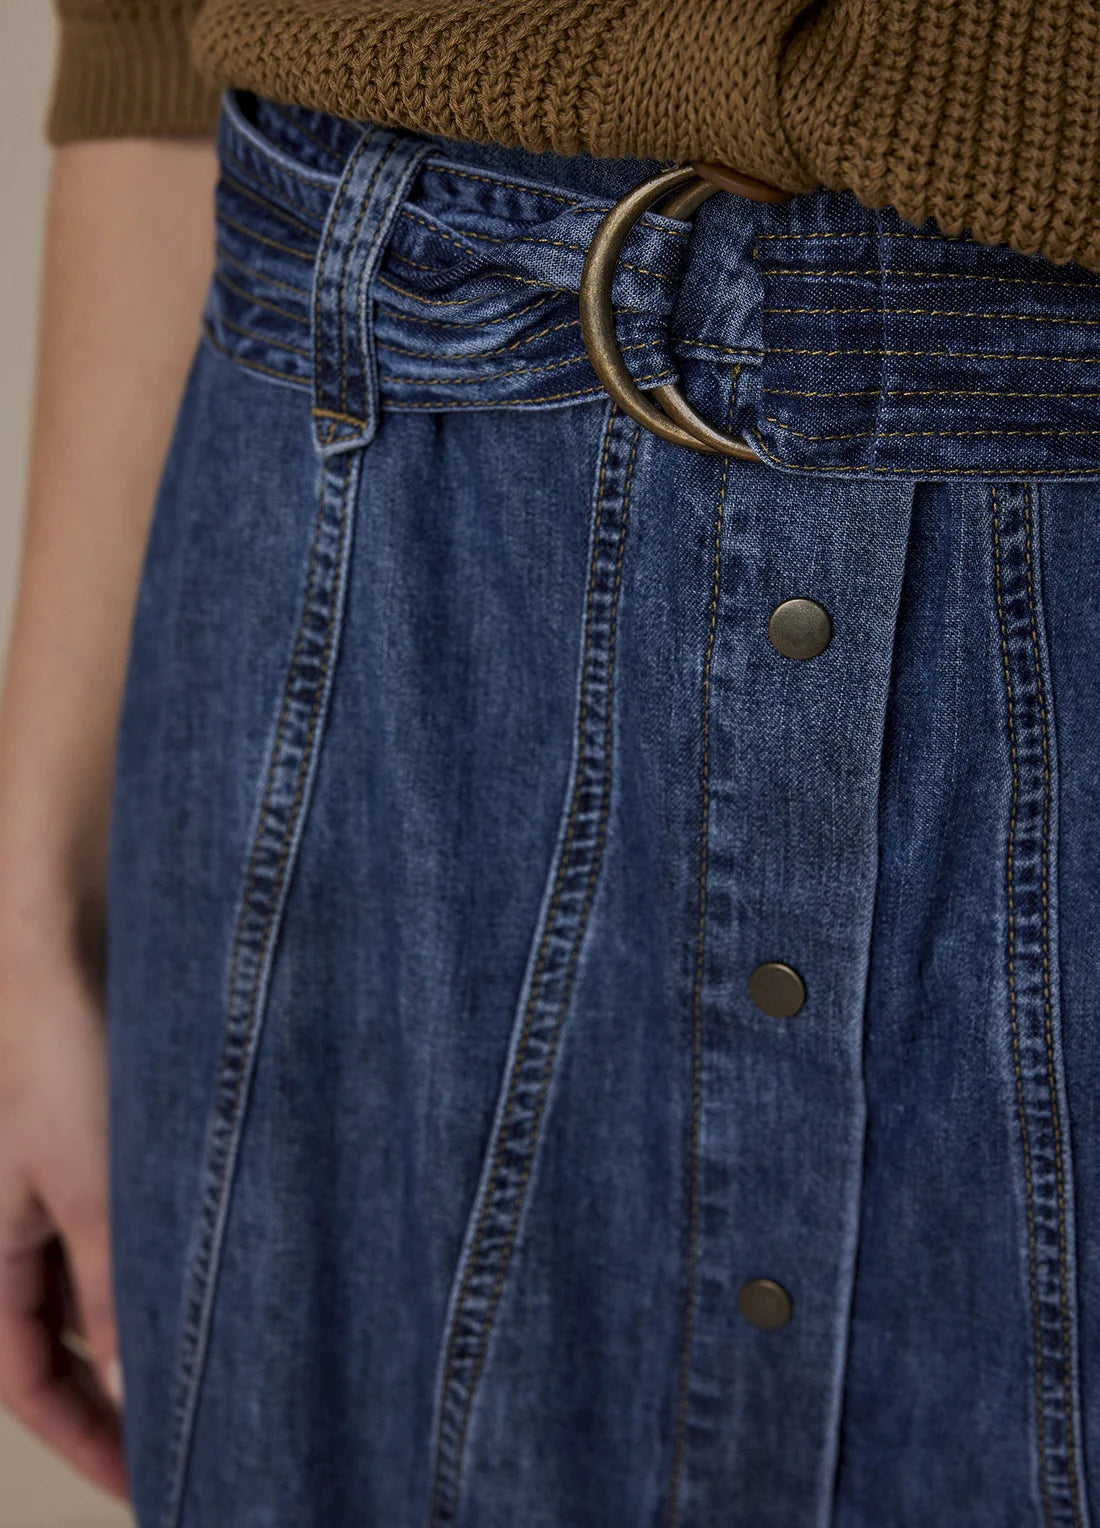 Summum | Denim skirt - vintage blue - 6s2147-5112